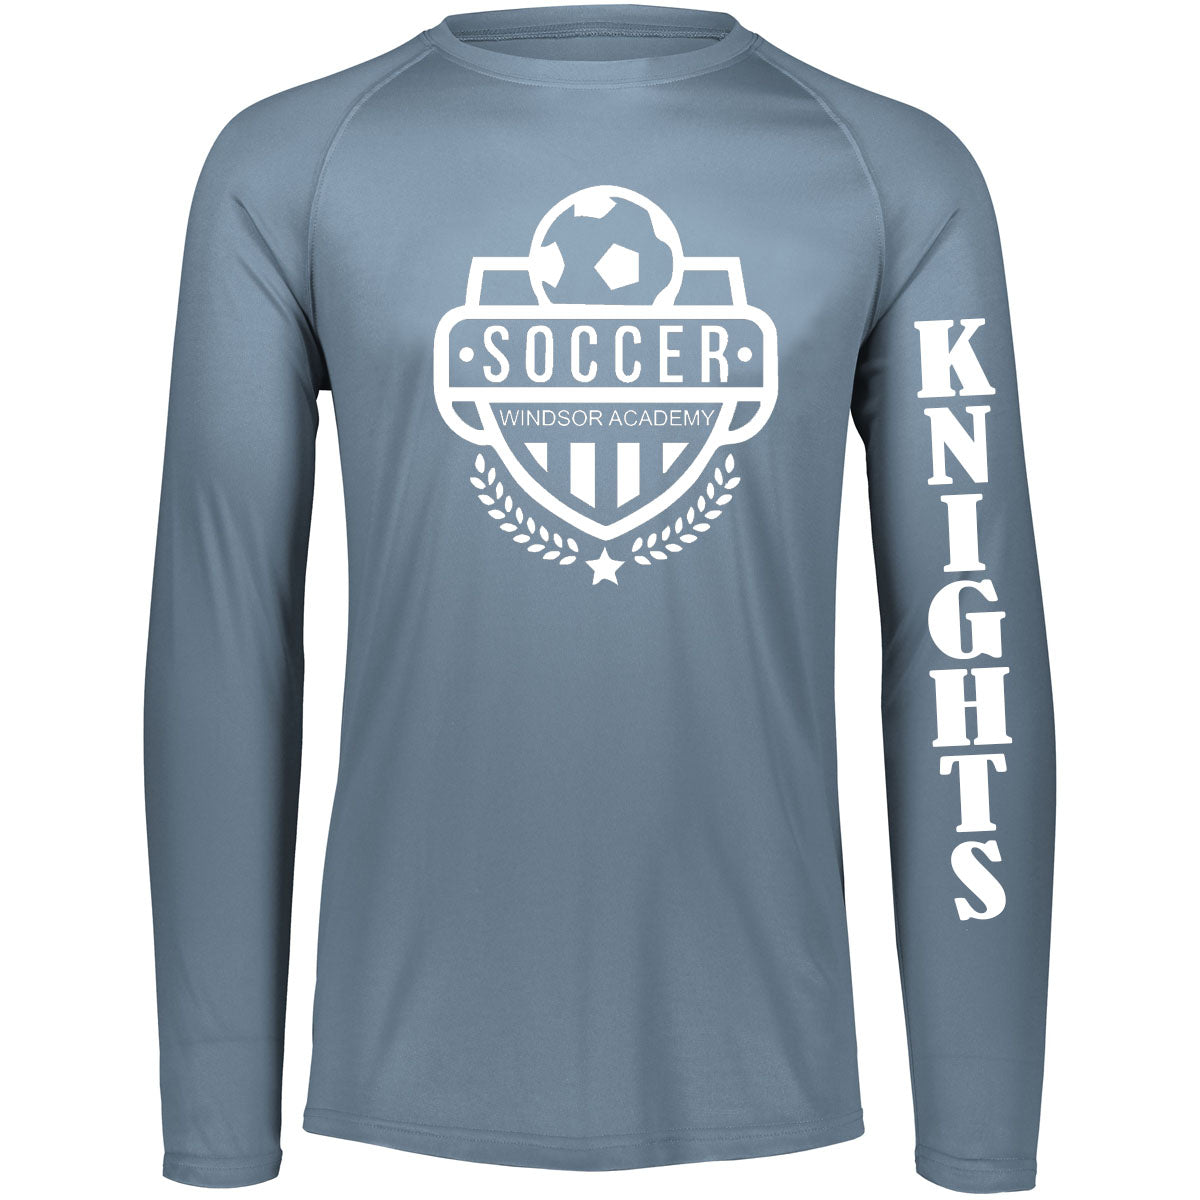 Windsor - Soccer - Windsor Academy Soccer Logo - Graphite DriFit Longsleeve Tee (2795/2796) - Southern Grace Creations